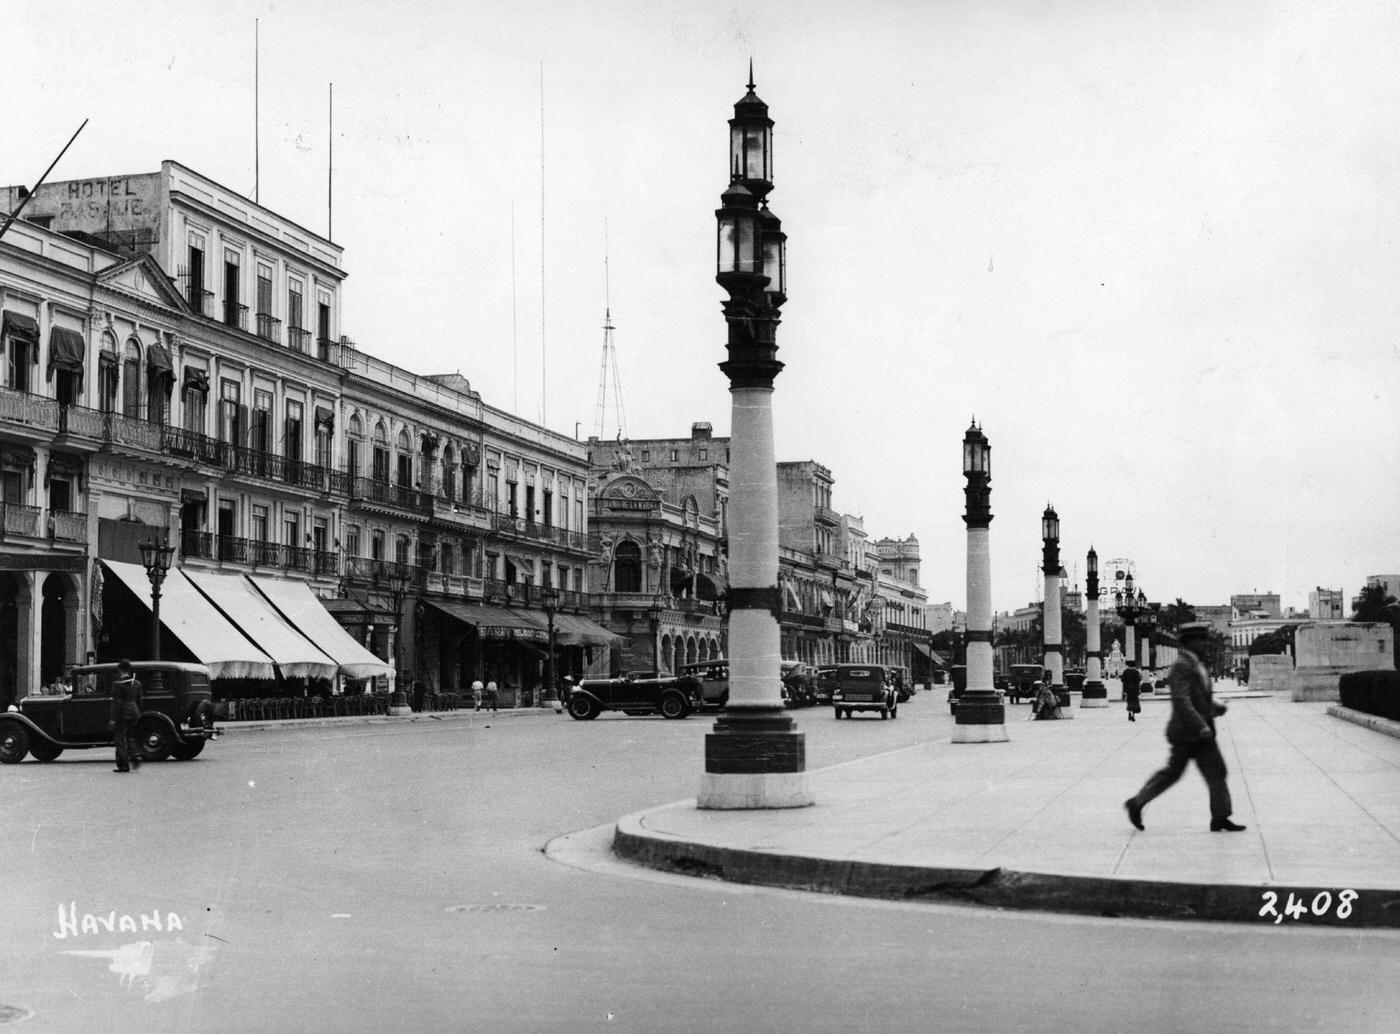 Street scene in Havana, Cuba, 1935